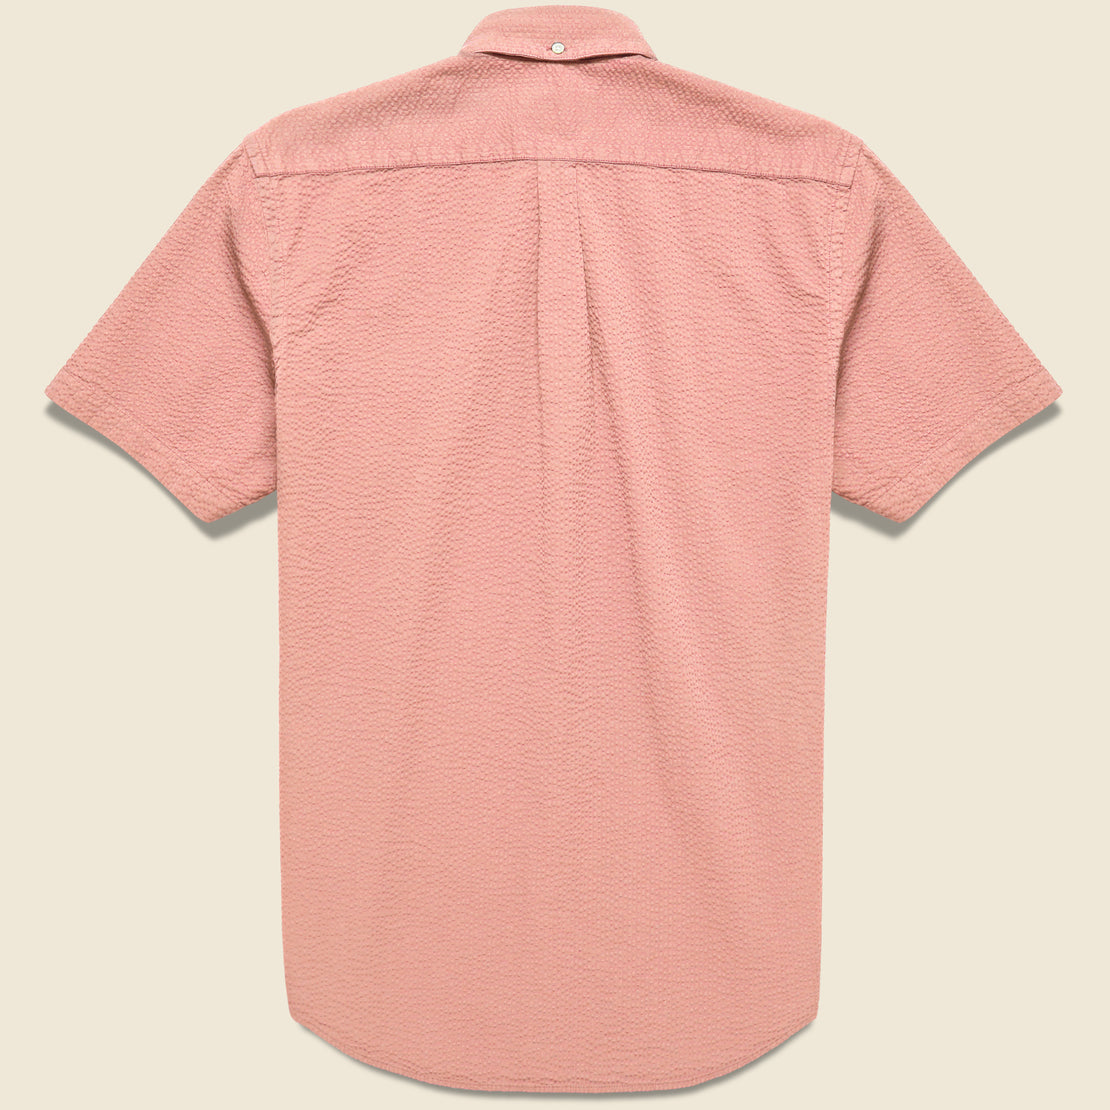 Atlantico Seersucker Shirt - Rose - Portuguese Flannel - STAG Provisions - Tops - S/S Woven - Seersucker